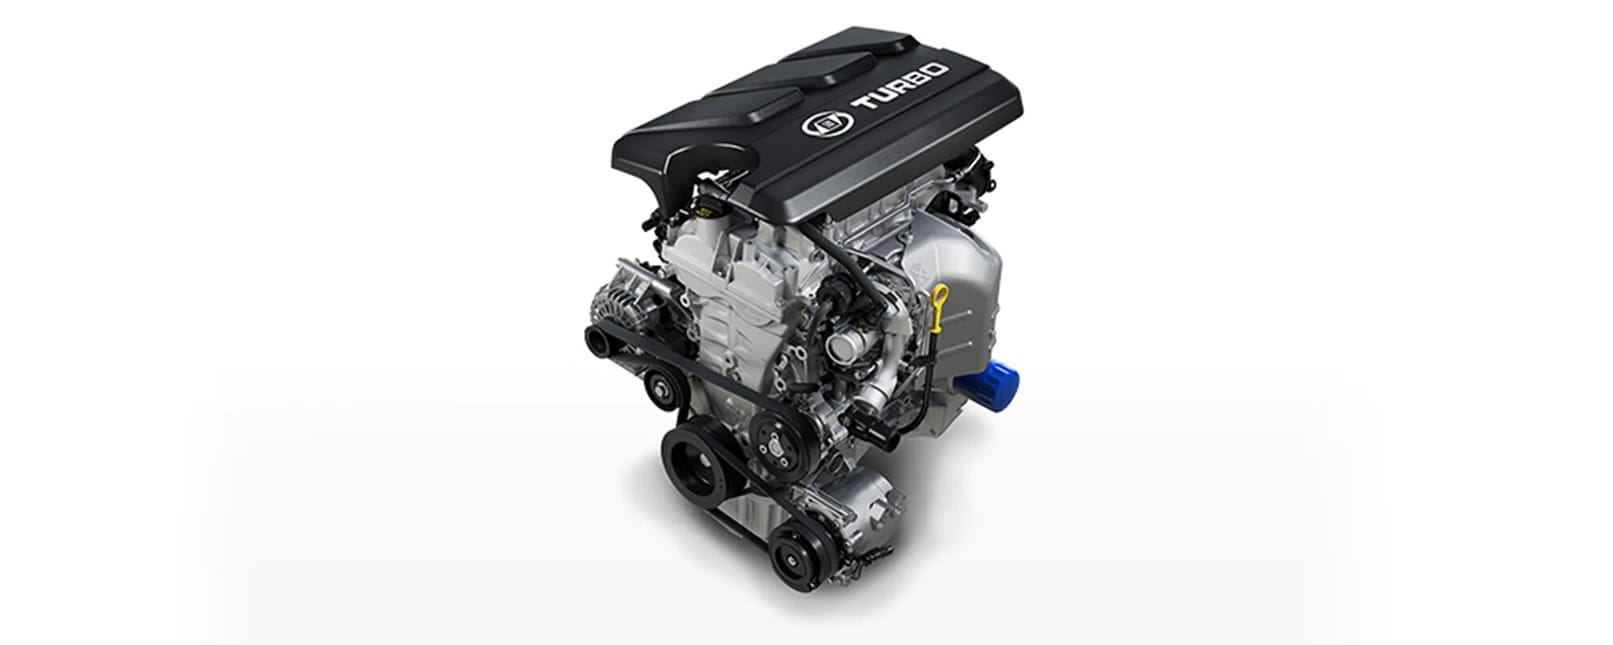 Performance Chevrolet Captiva - Motor turbo de 1.5 litros